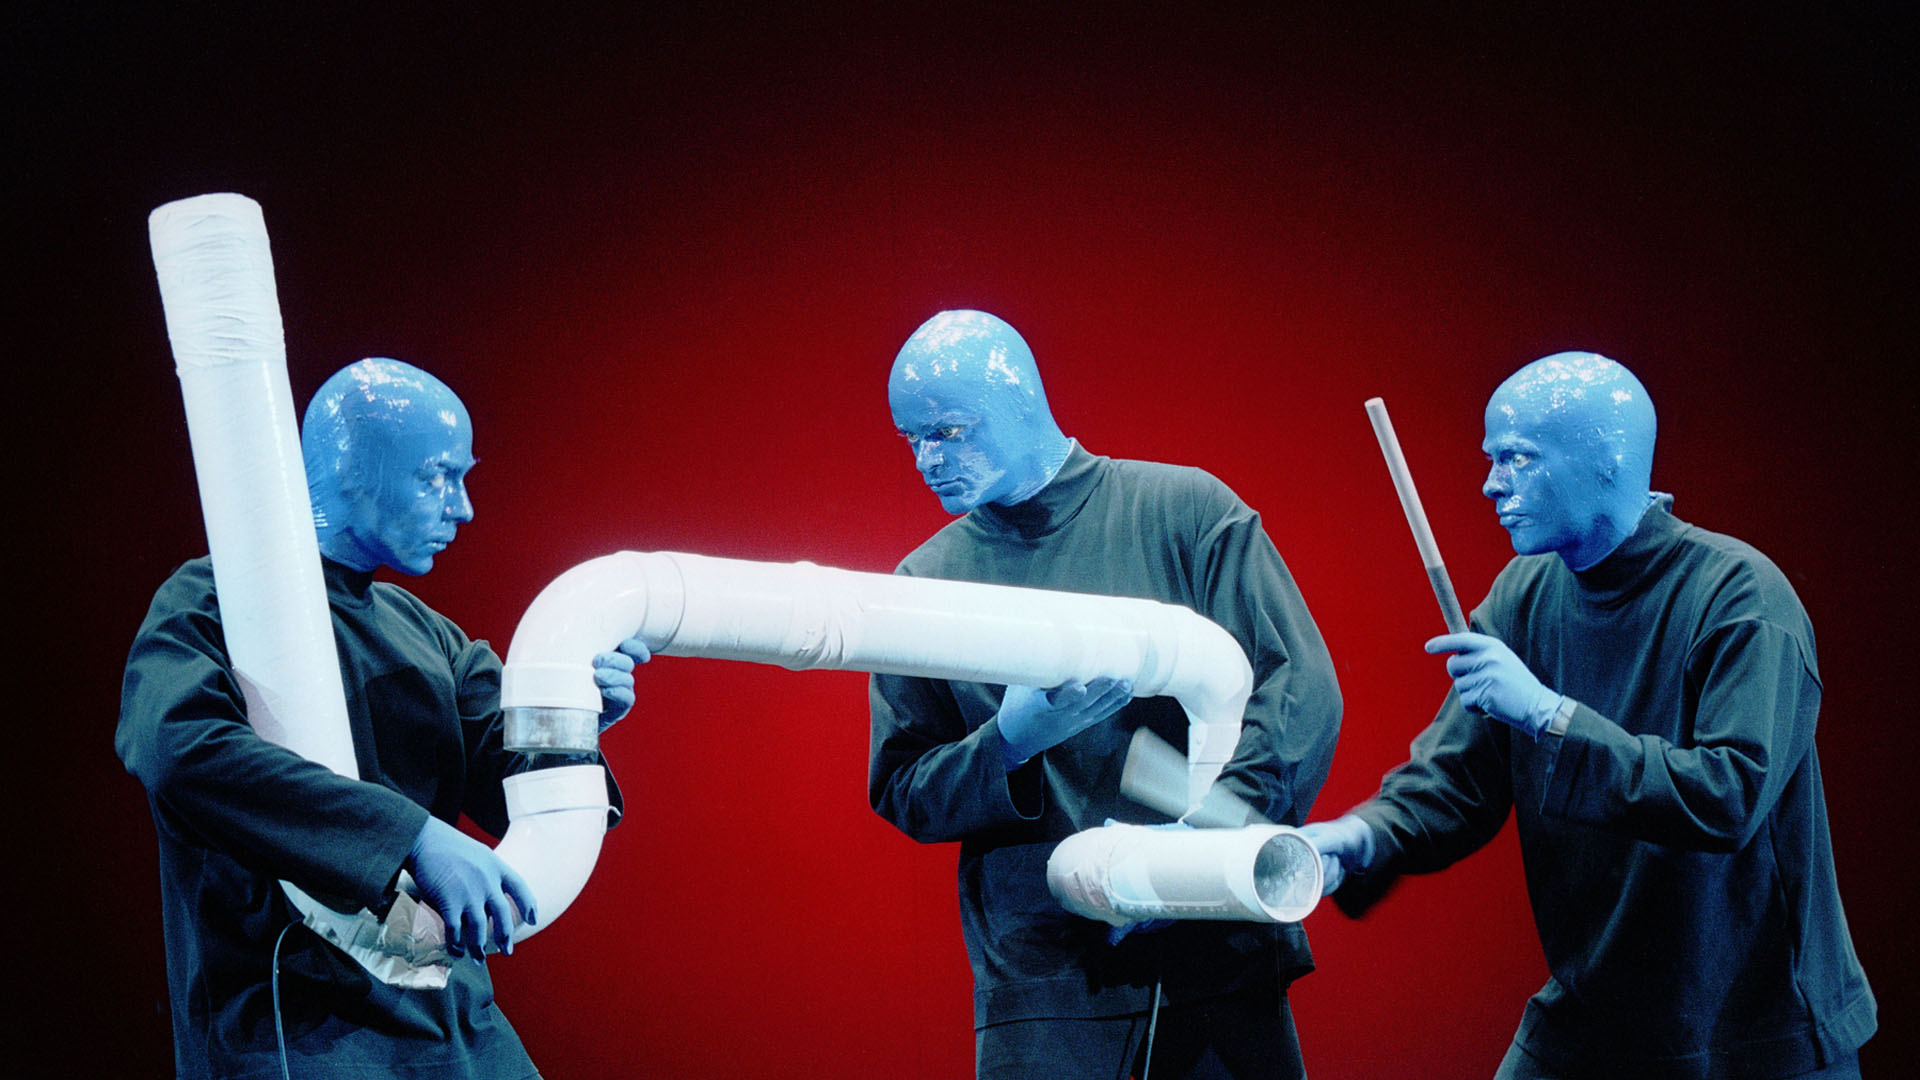 Blue Man Group: free desktop wallpaper and background image